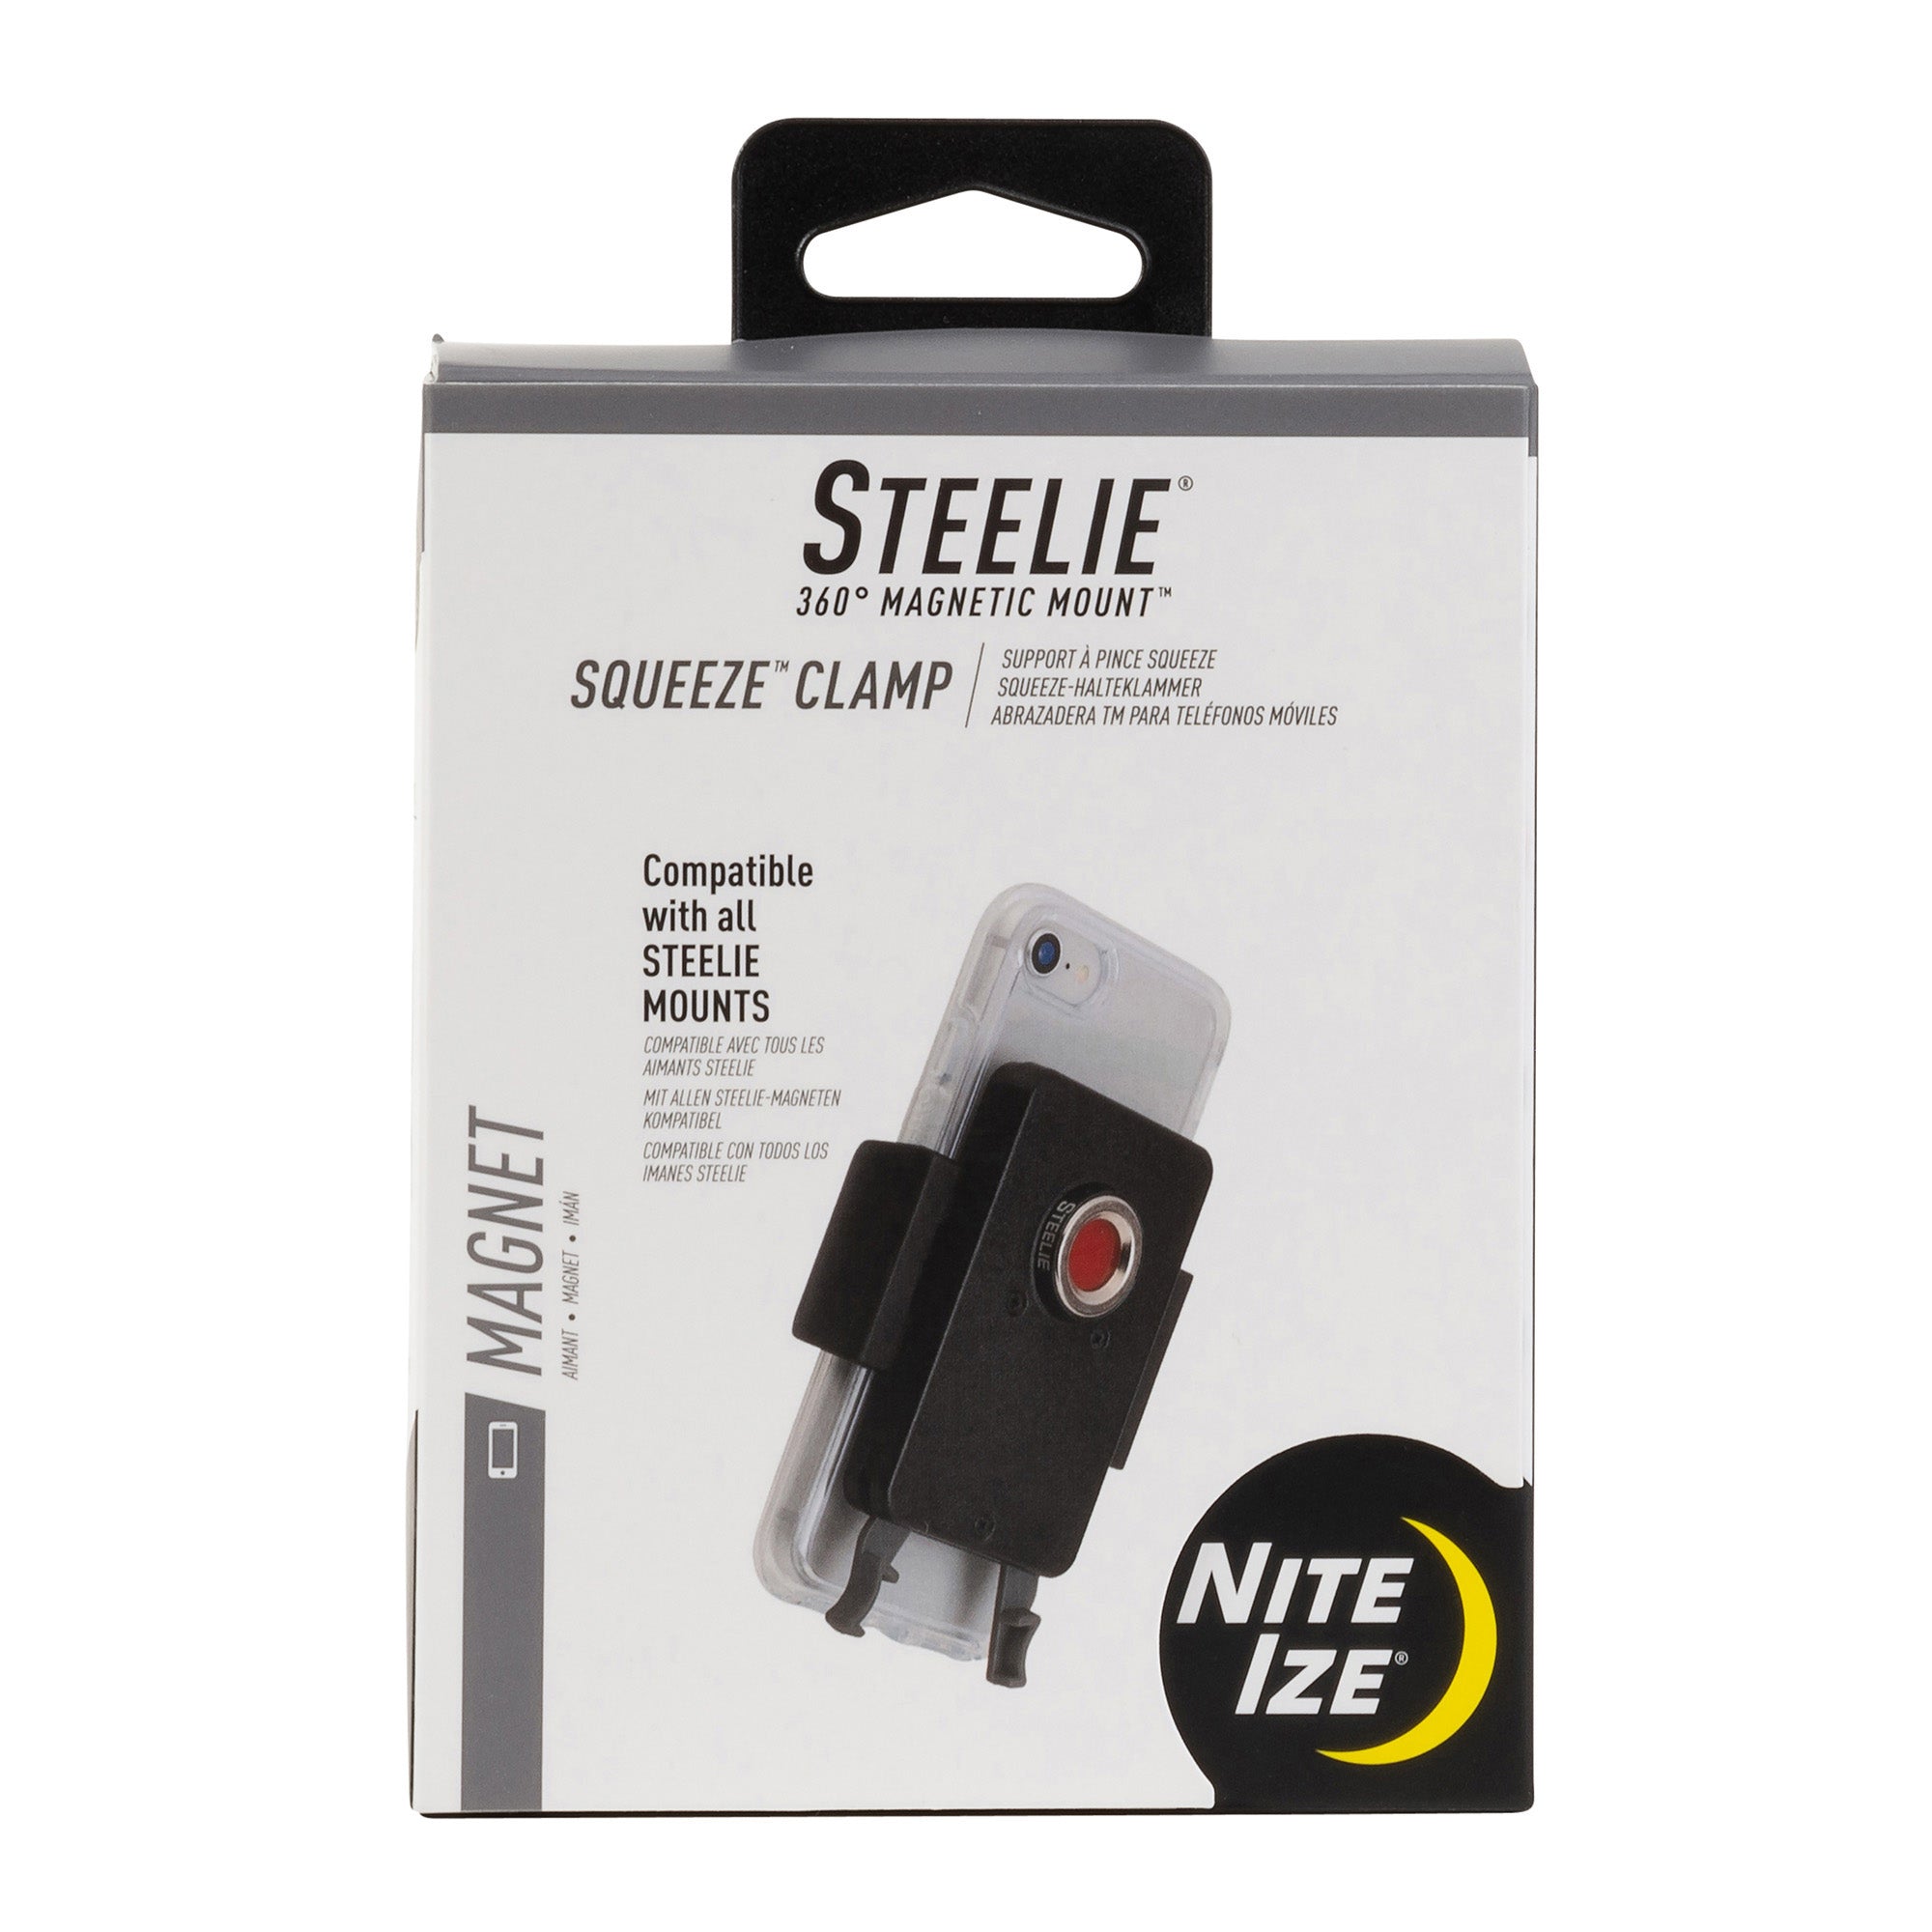 Nite Ize Steelie Squeeze Clamp - 15-09673